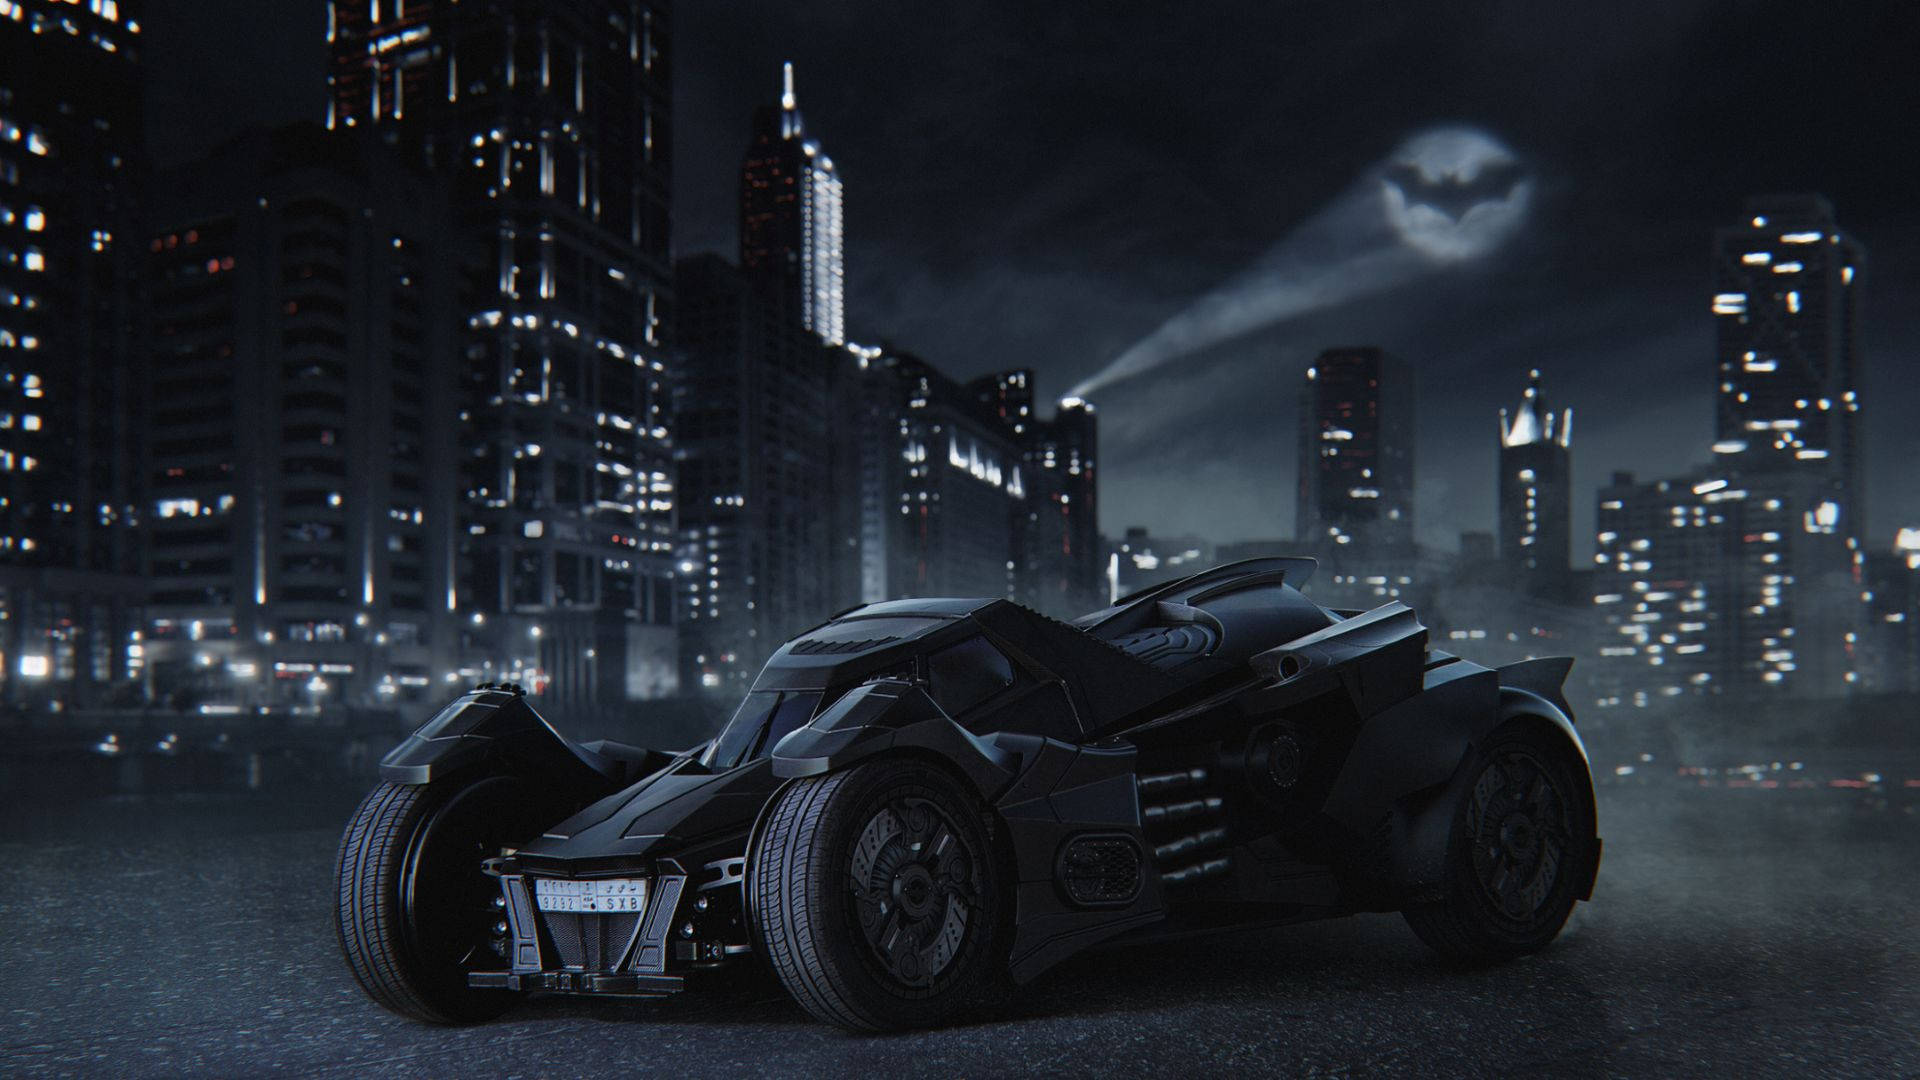 Batman Forever Batmobile In Gotham